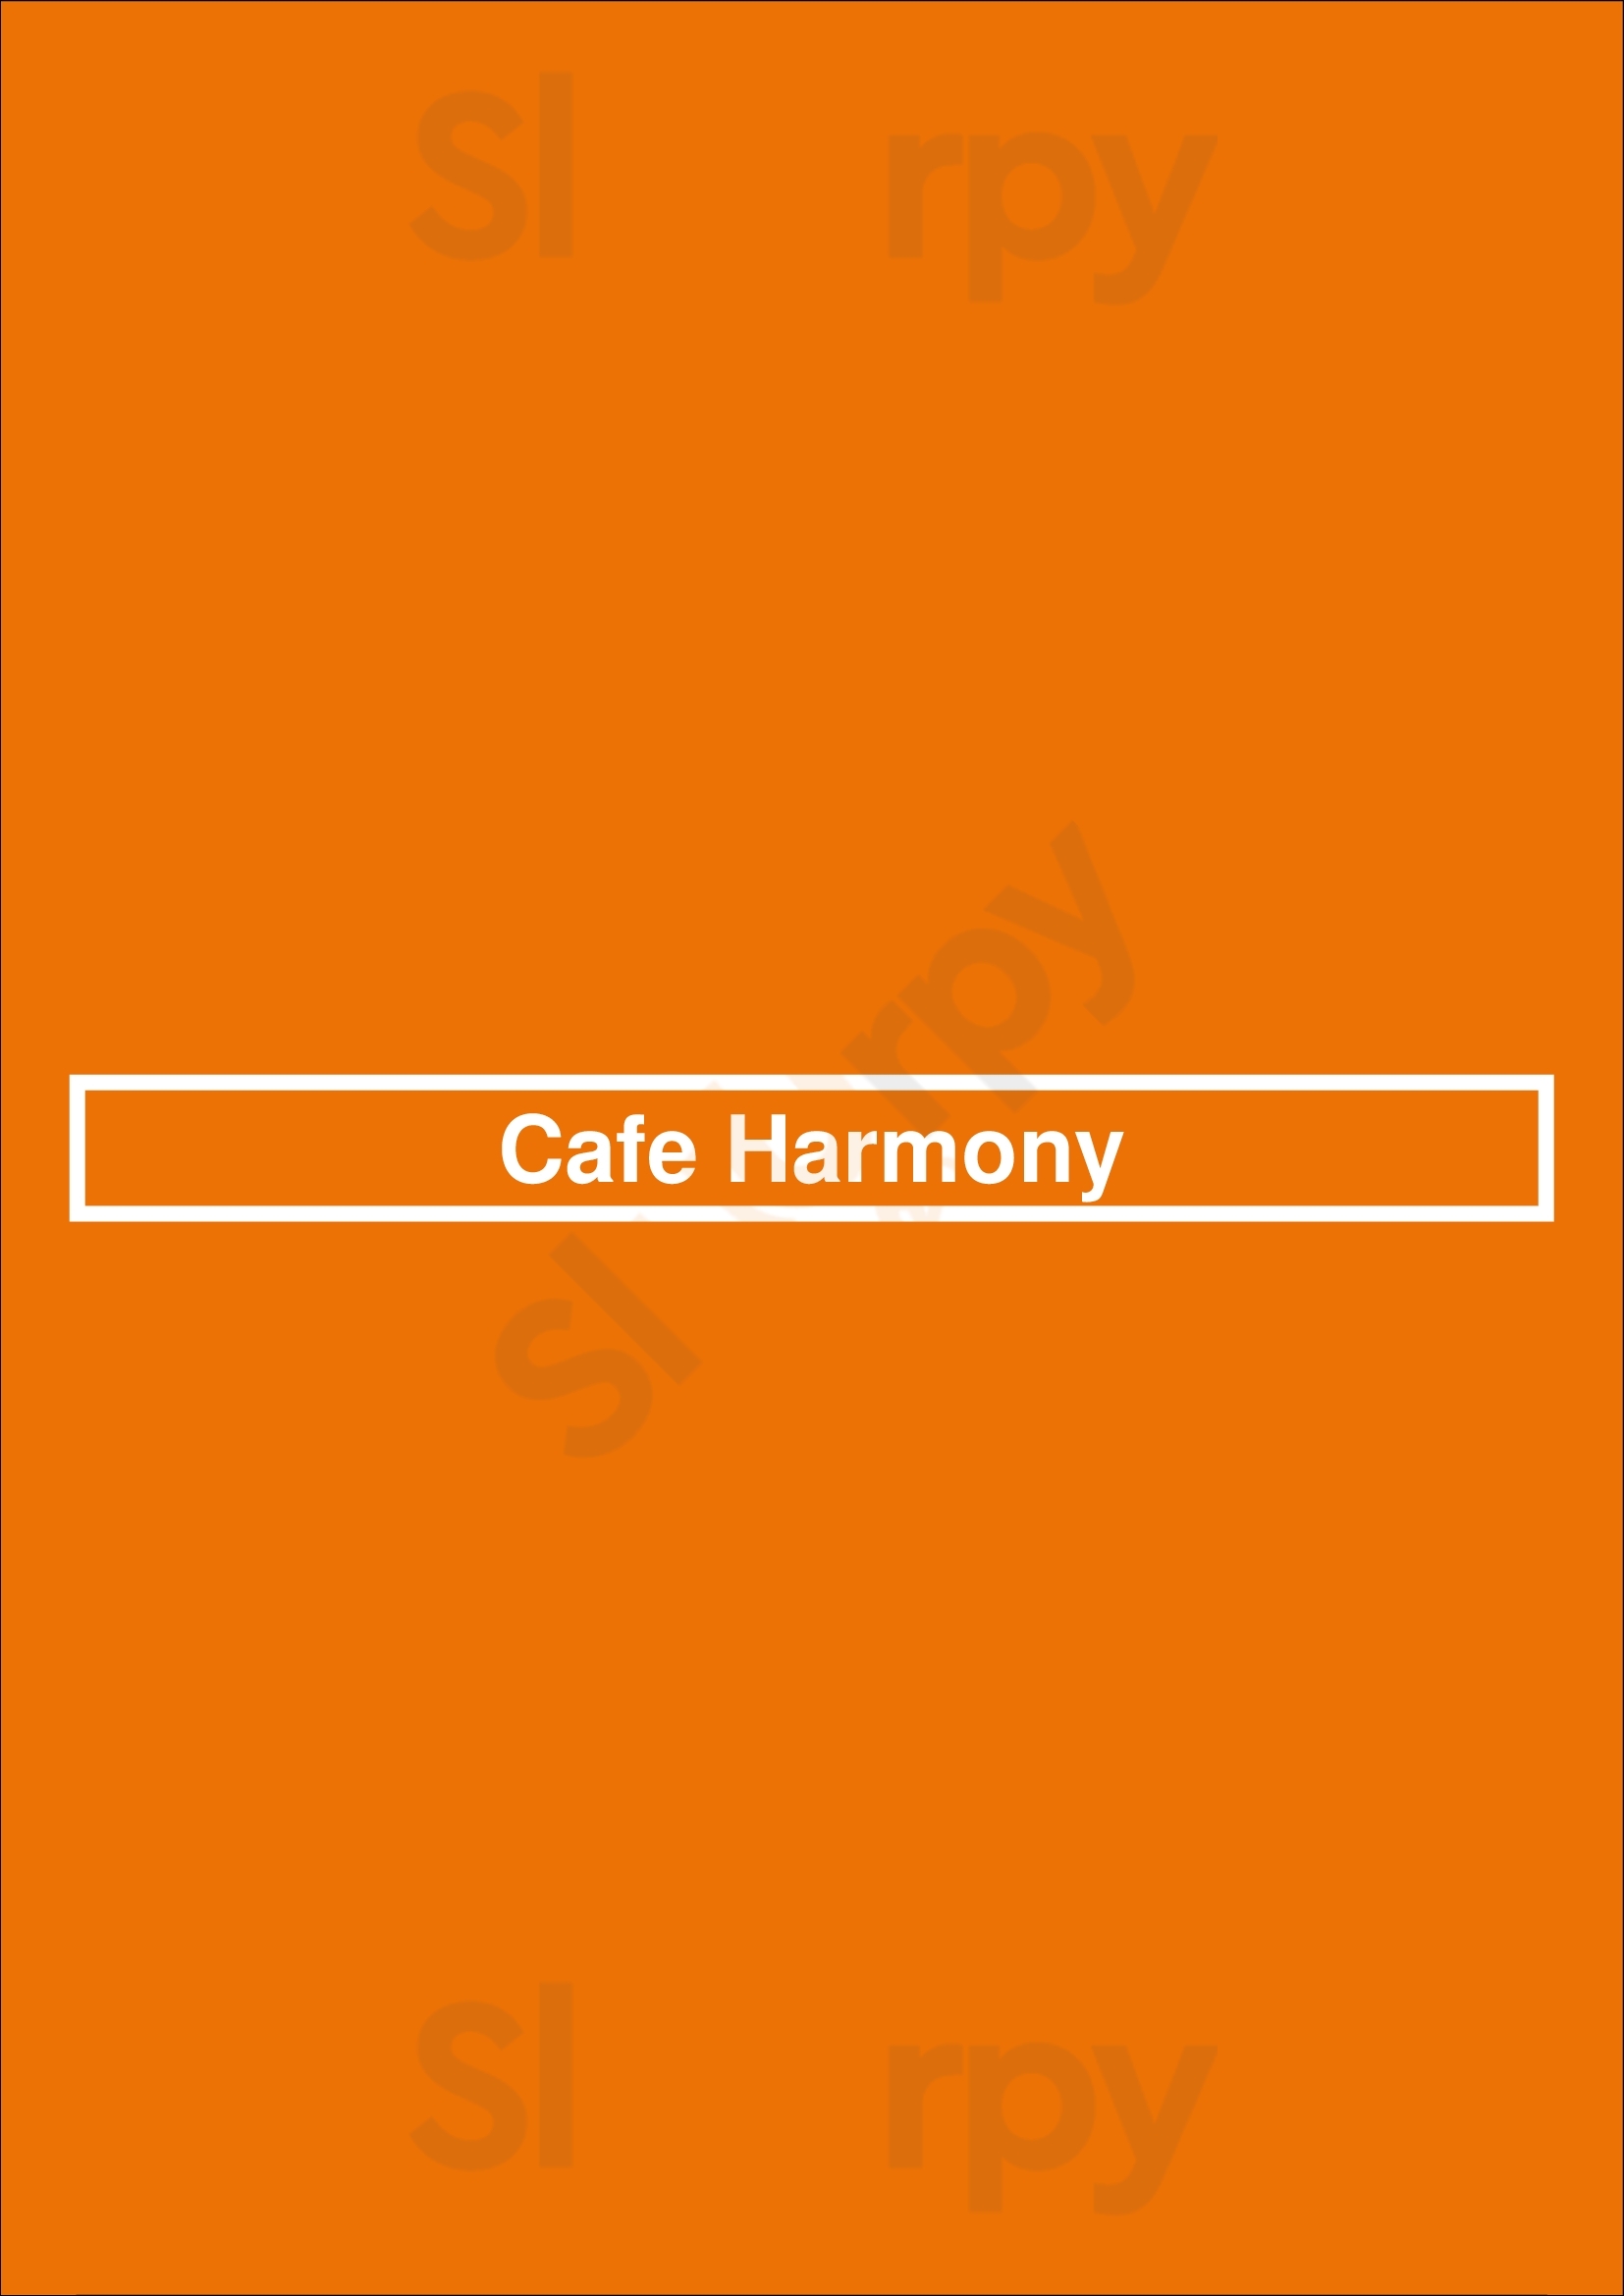 Cafe Harmony Aberdeen Menu - 1